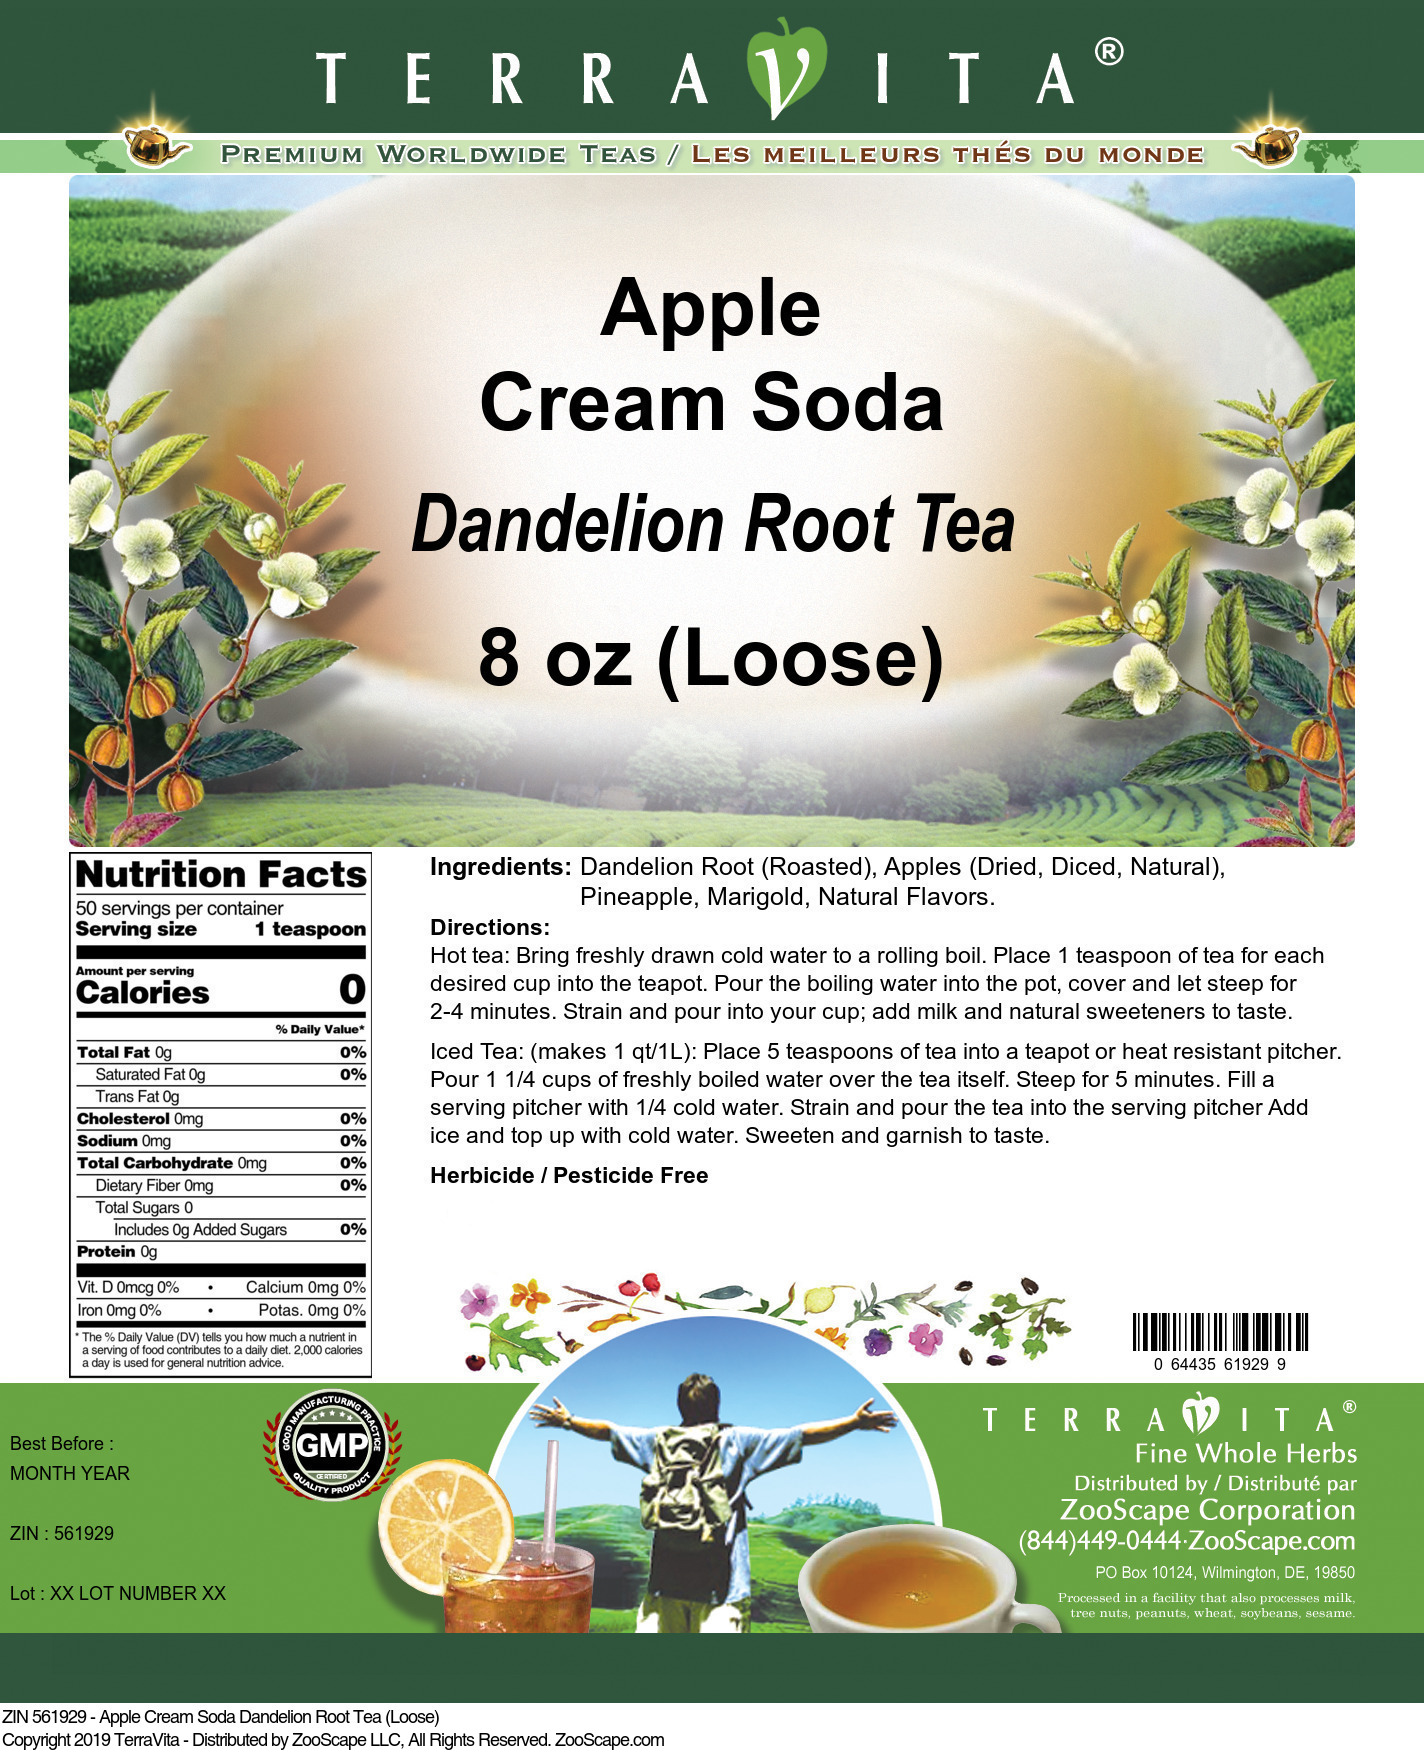 Apple Cream Soda Dandelion Root Tea (Loose) - Label